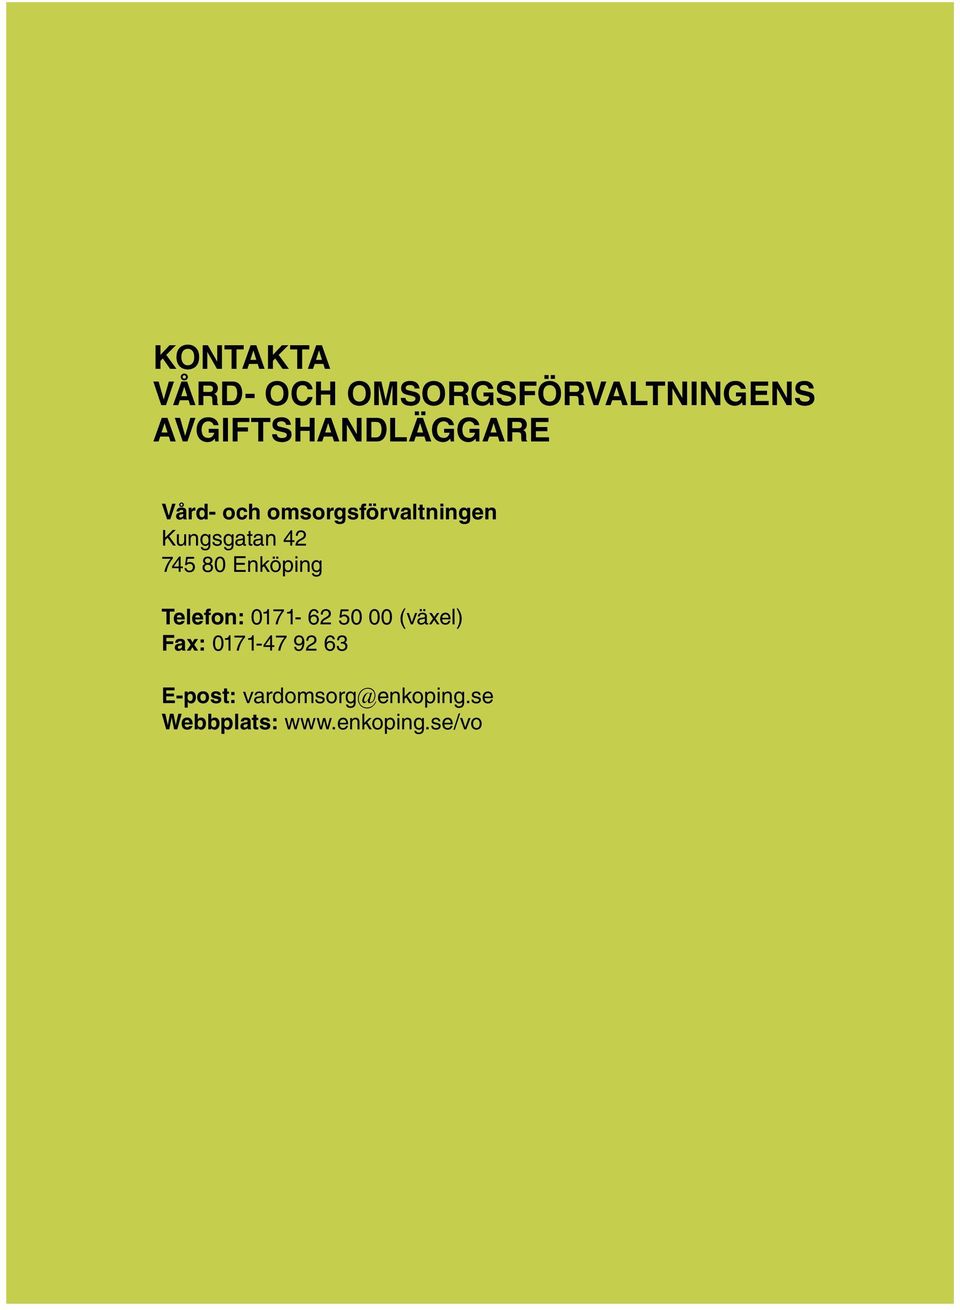 Kungsgatan 42 745 80 Enköping Telefon: 0171-62 50 00